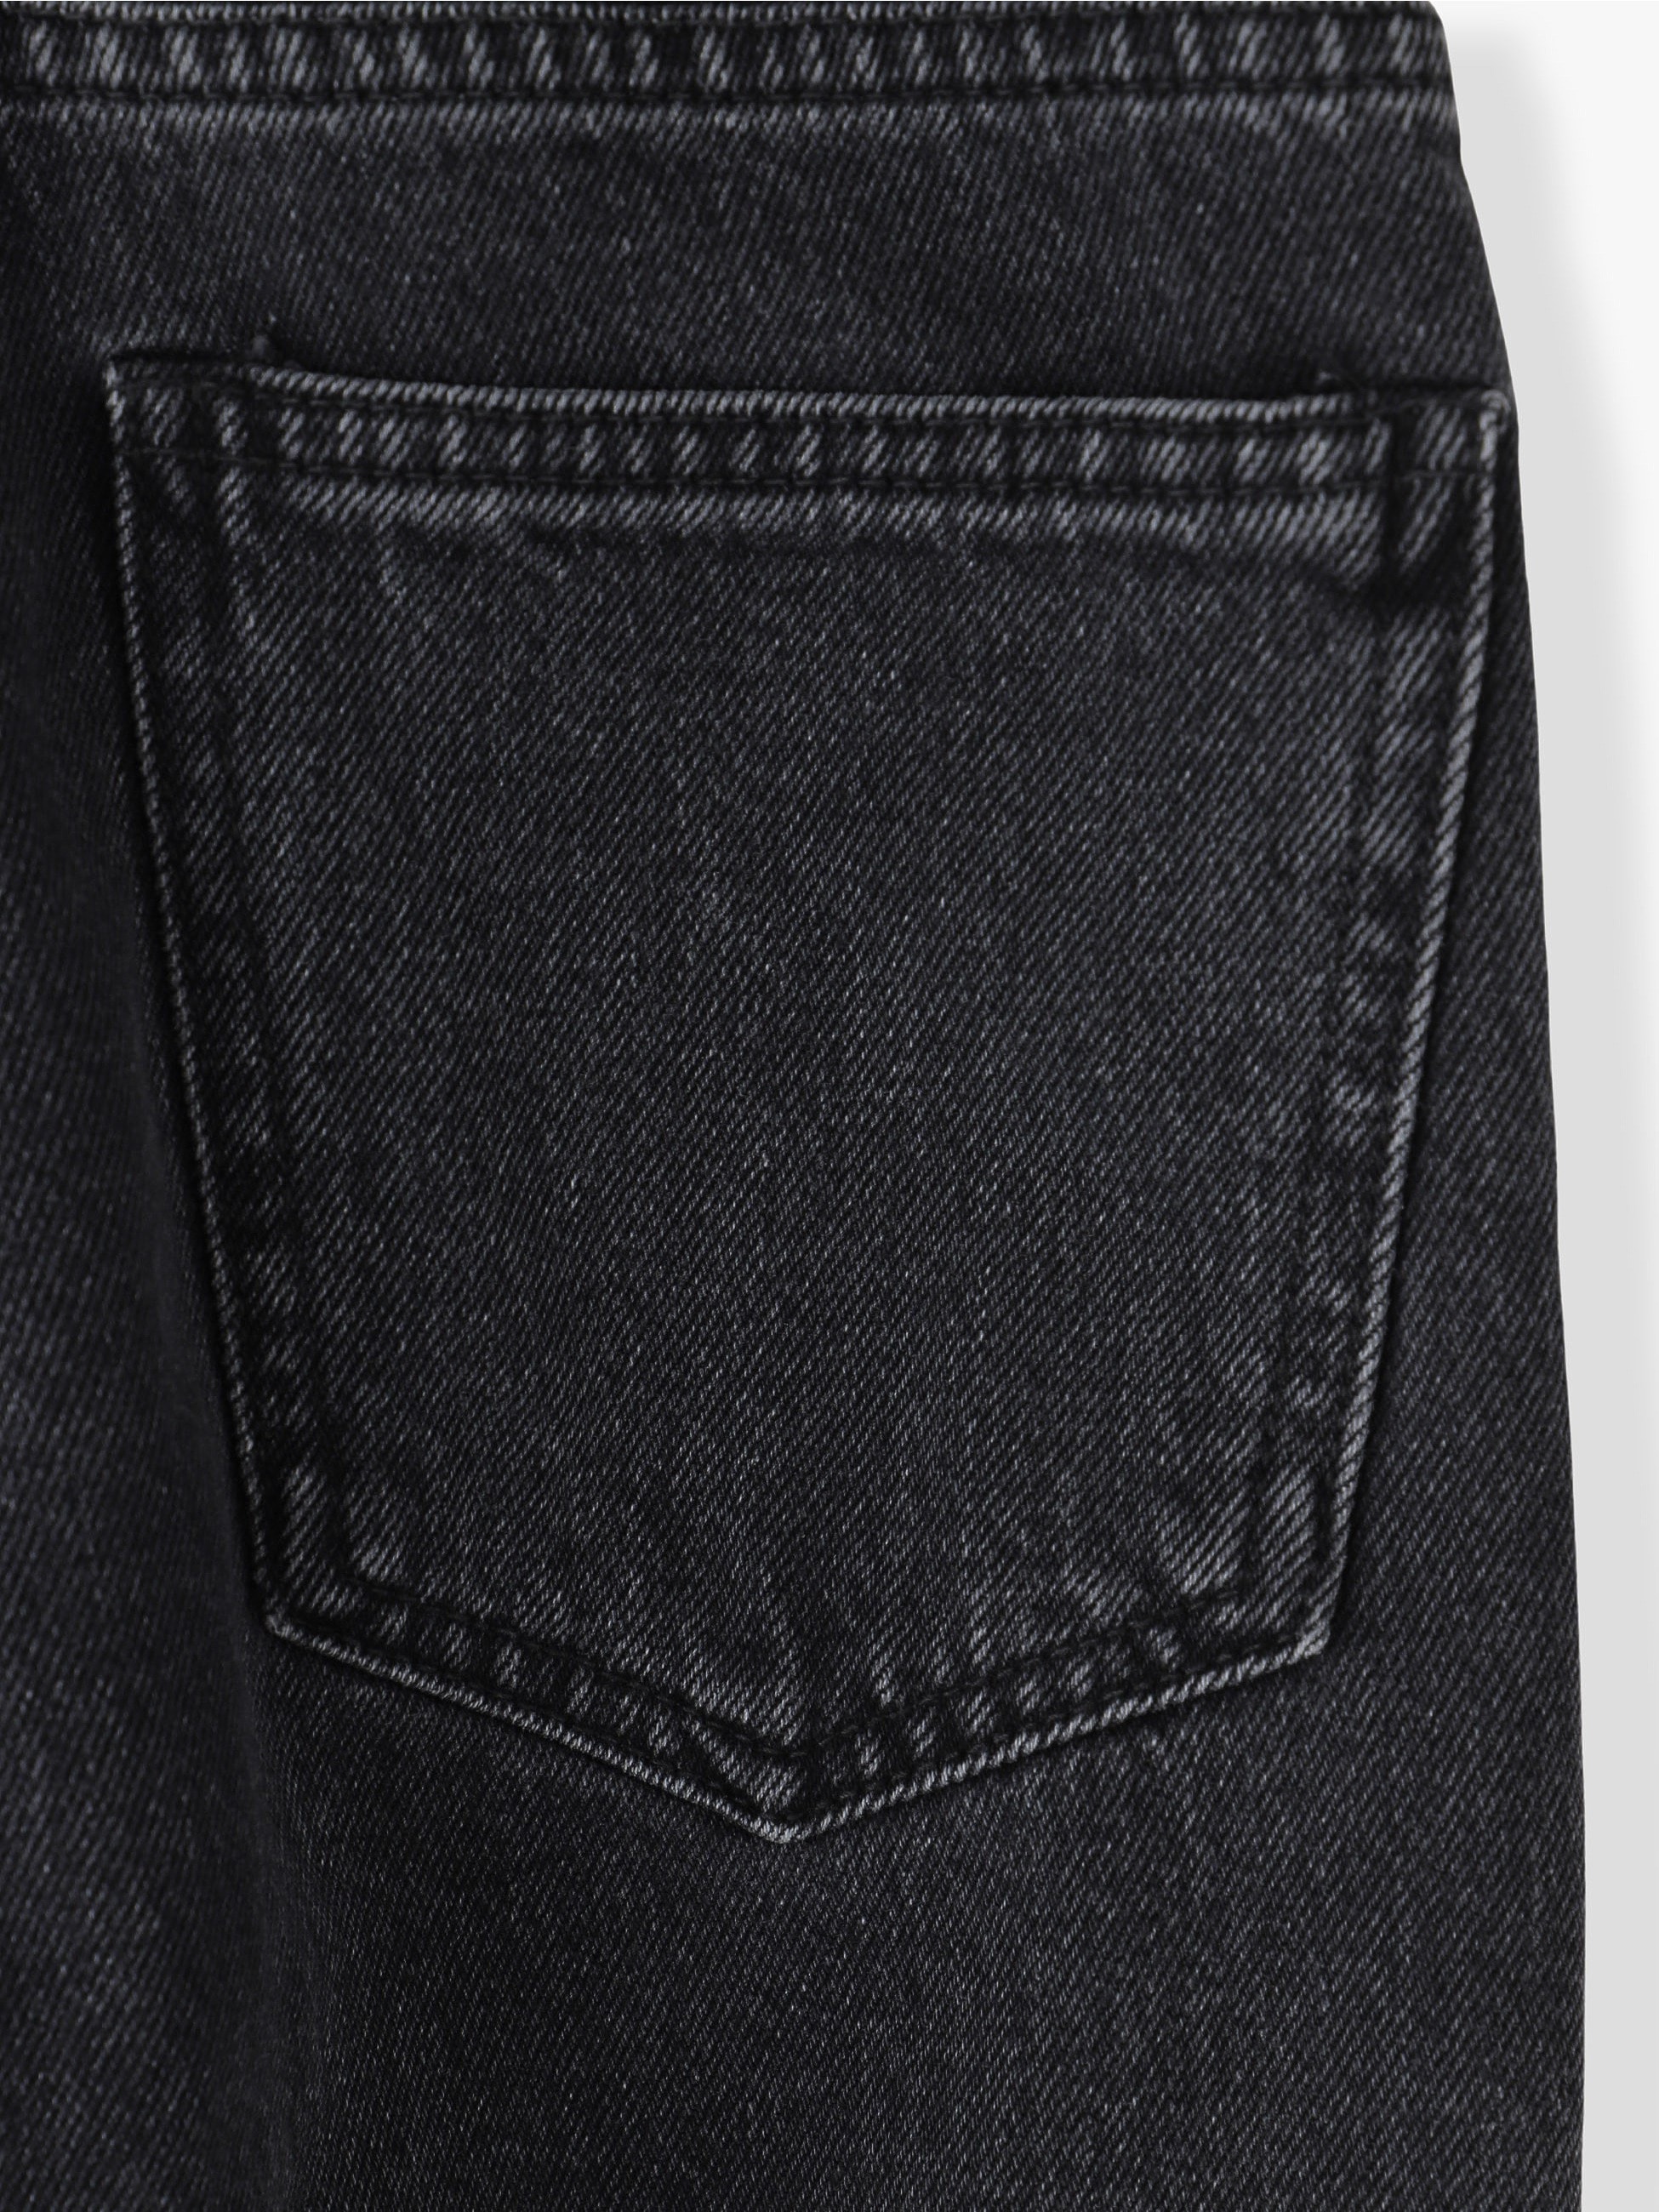 Bootscut Denim Pants (black)